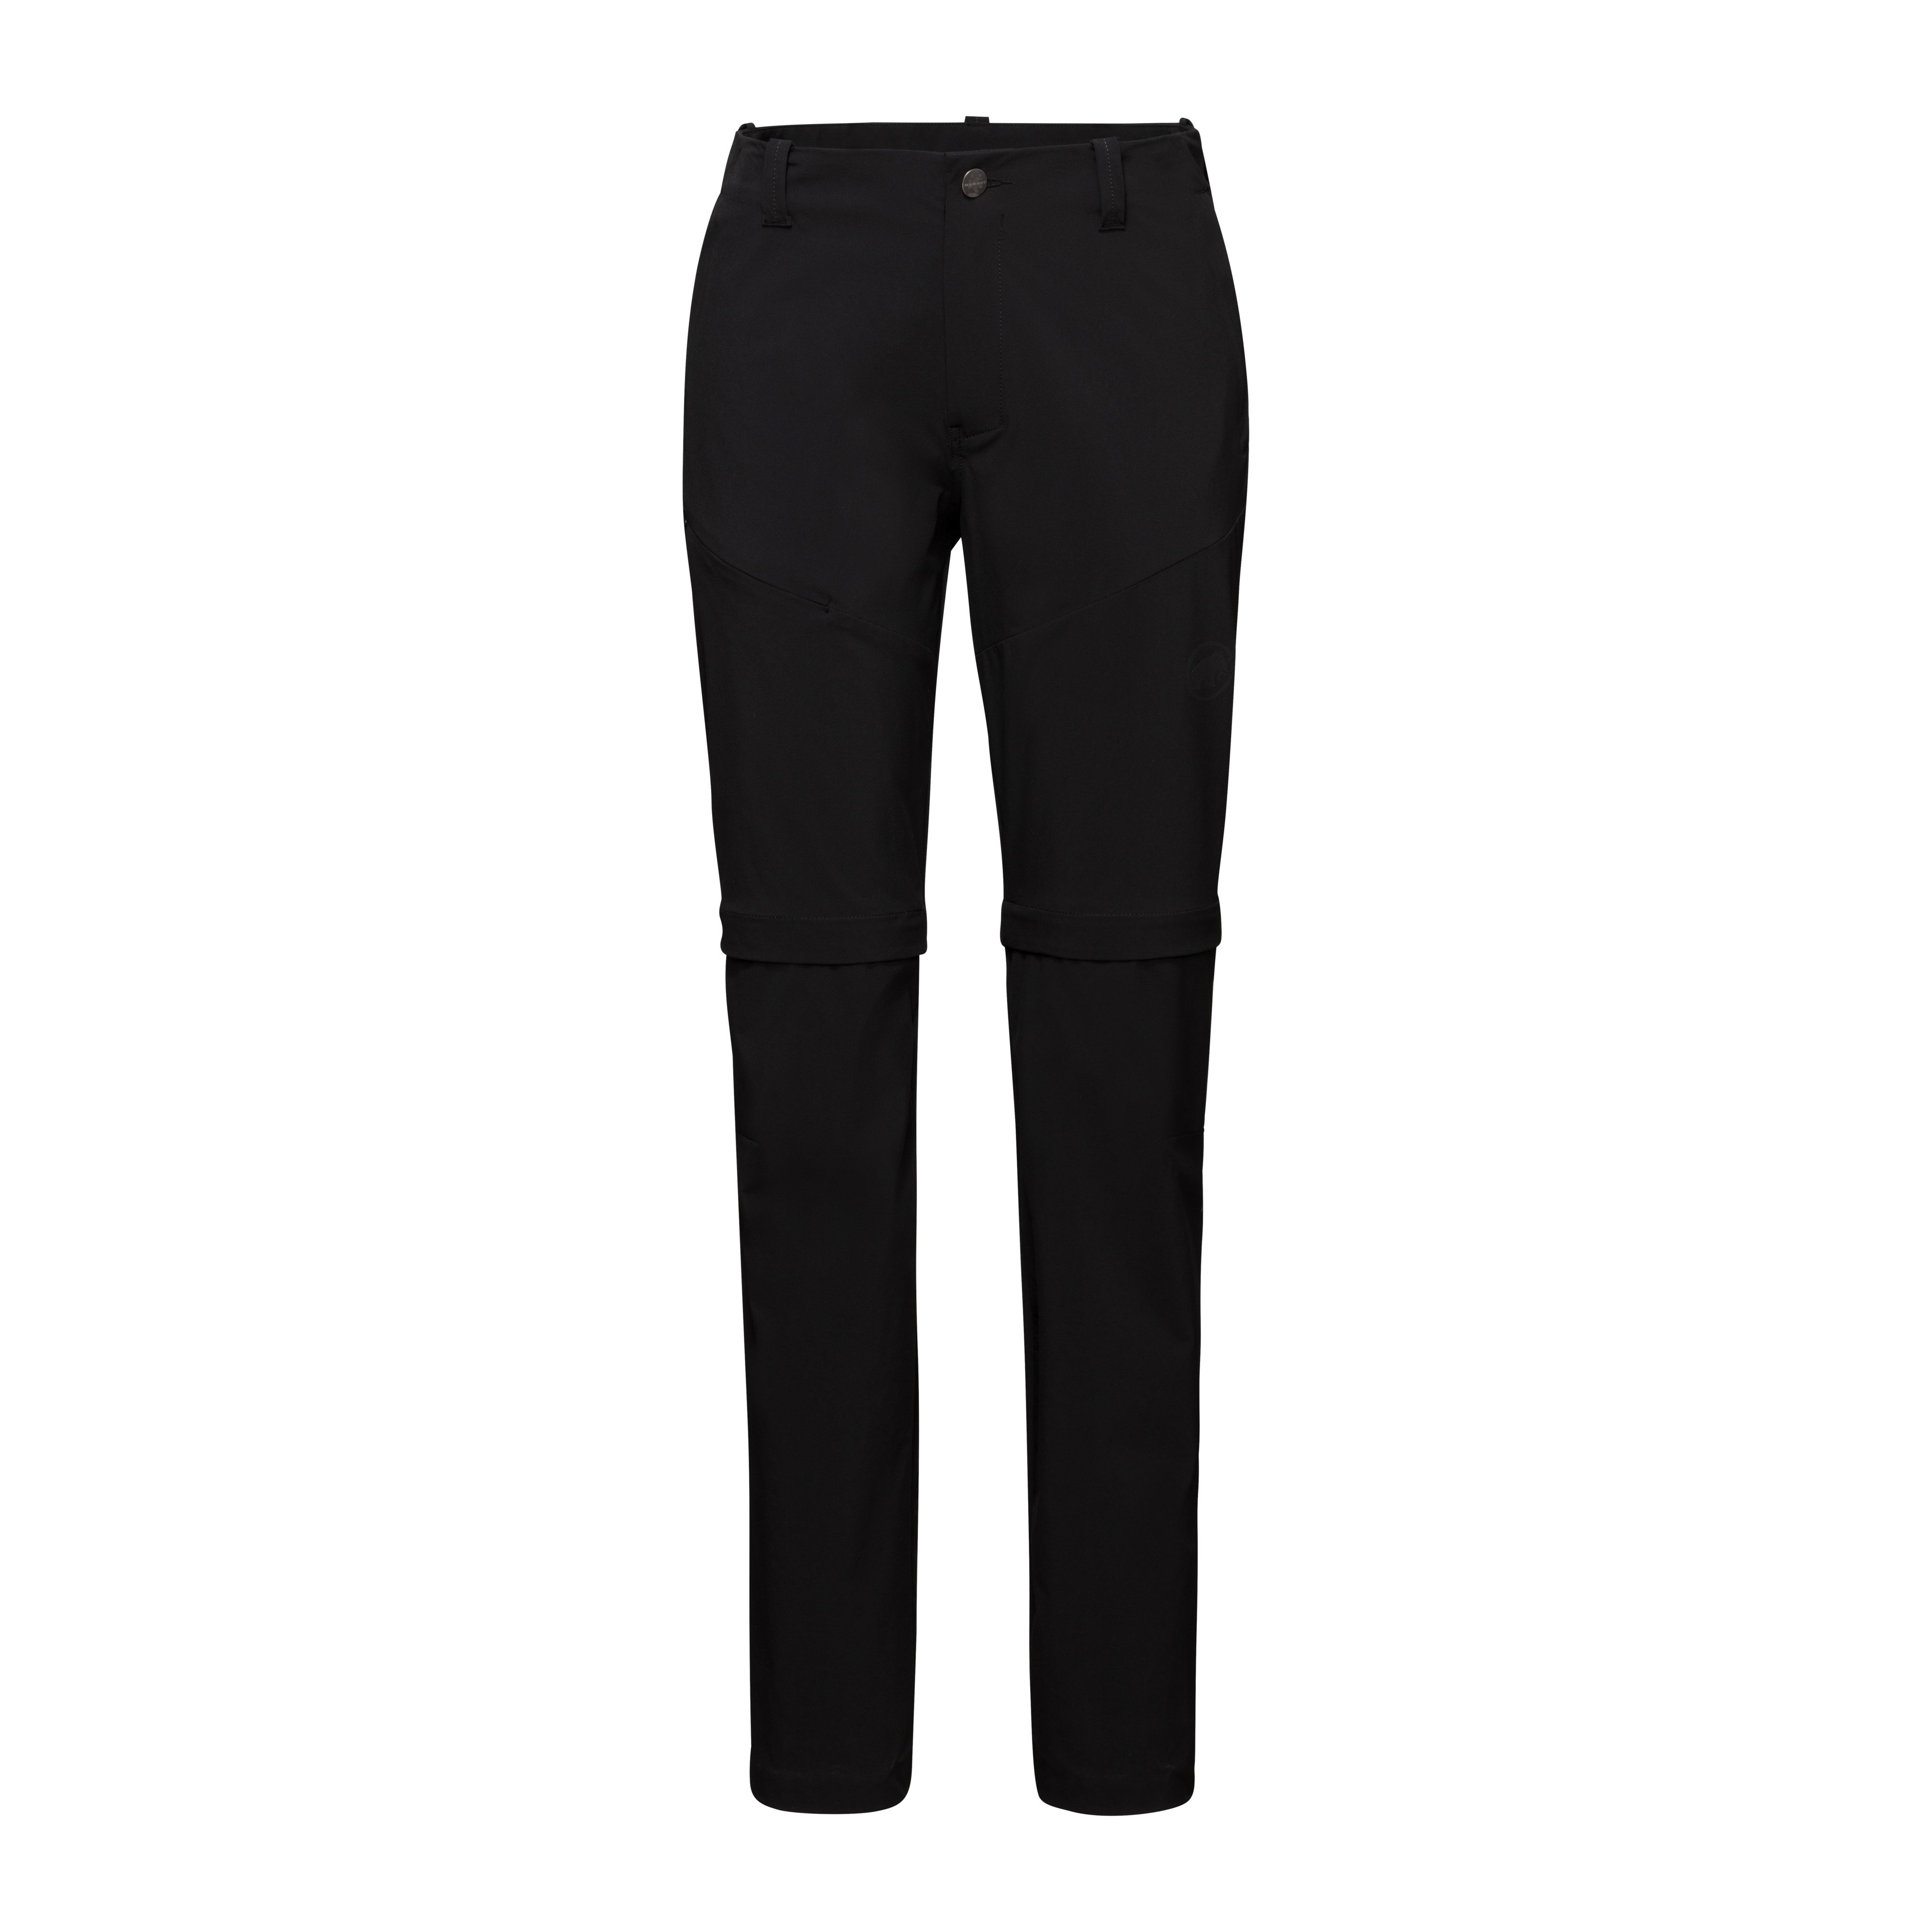 Runbold Zip Off Pants Women - black, EU 46, court product image